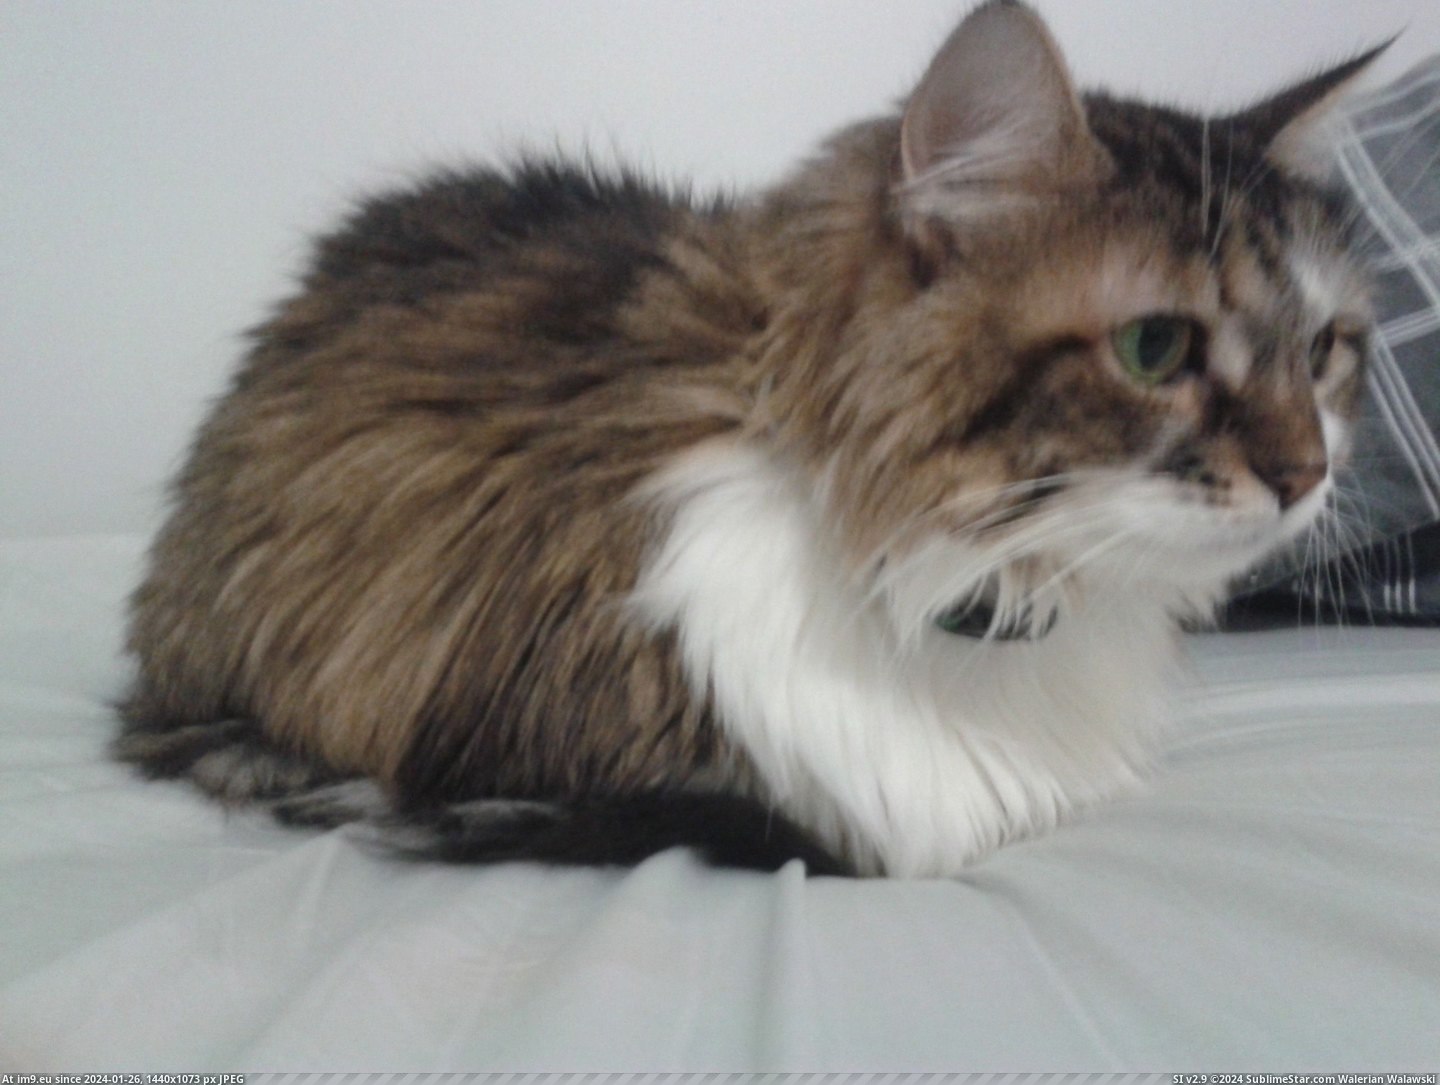 #Cats #Loaf #Cat [Cats] Cat Loaf Pic. (Bild von album My r/CATS favs))